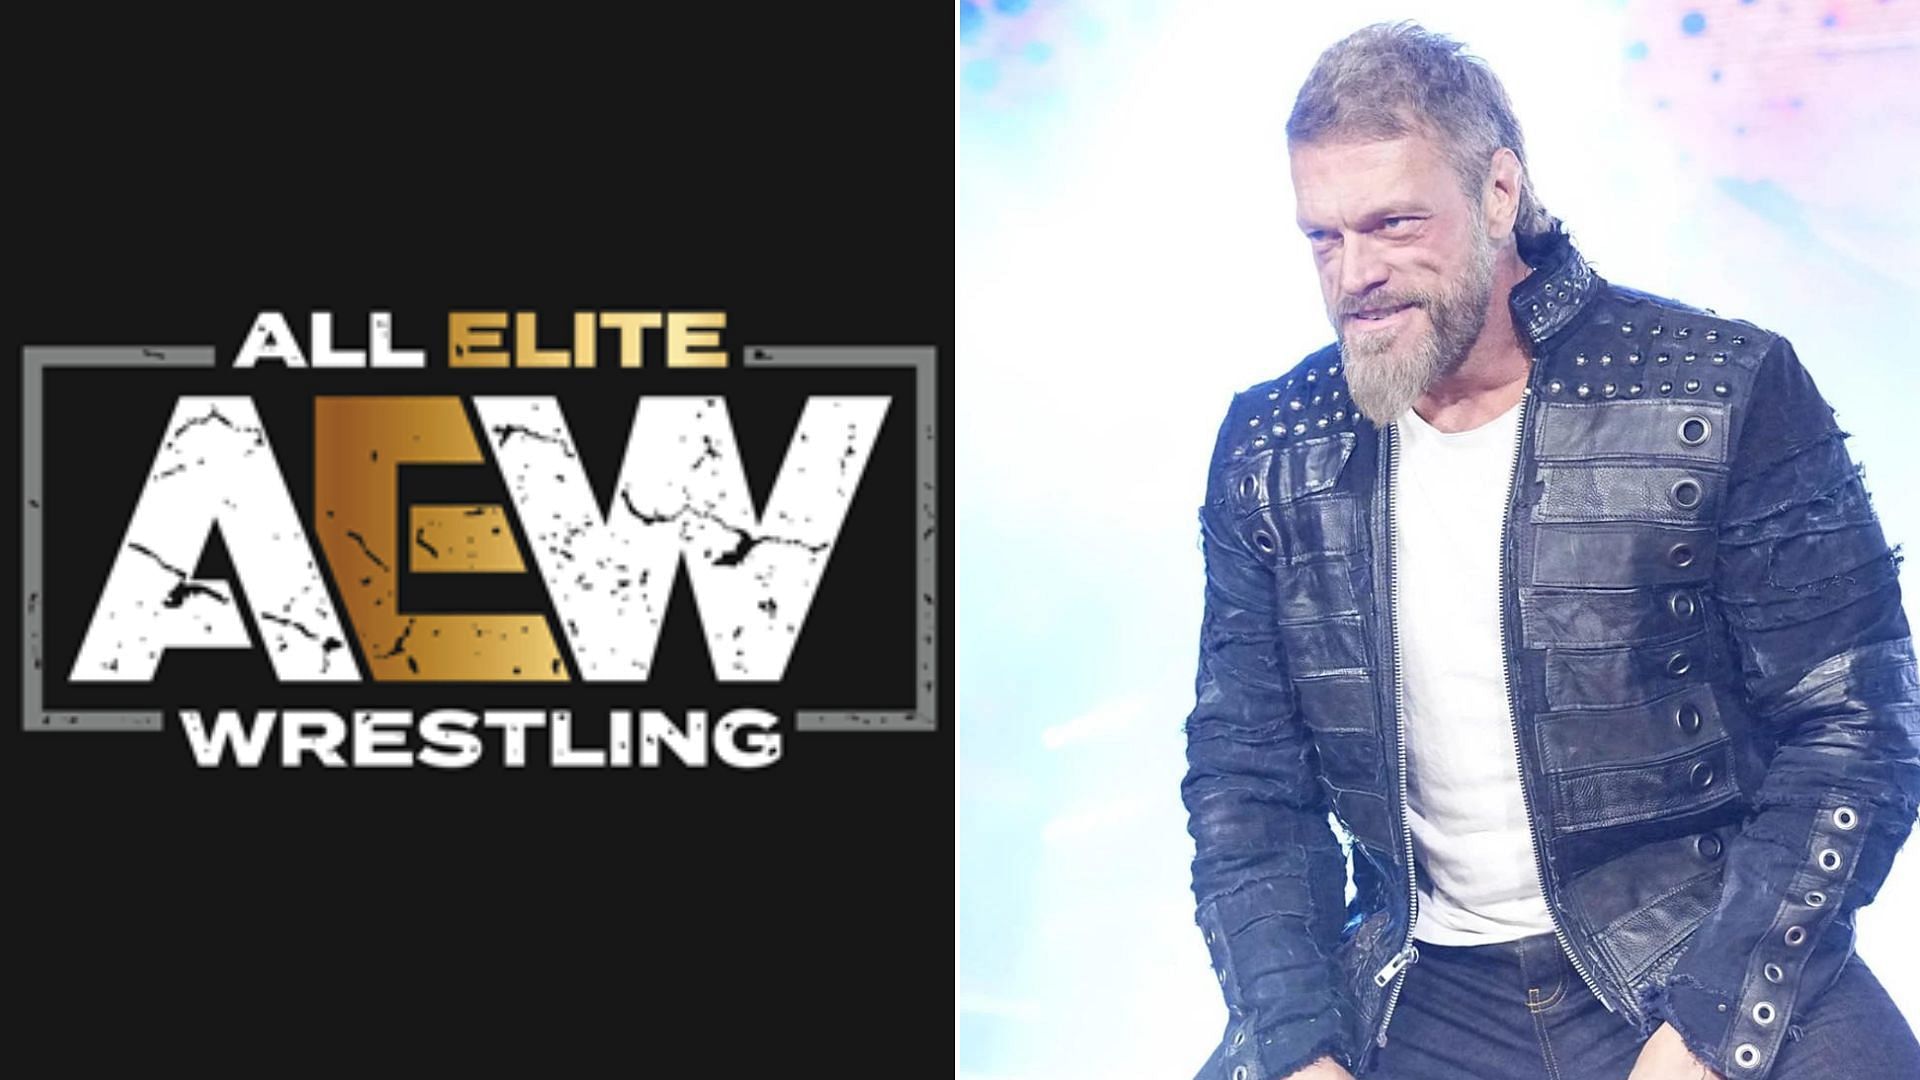 Edge is former WWE World Champion